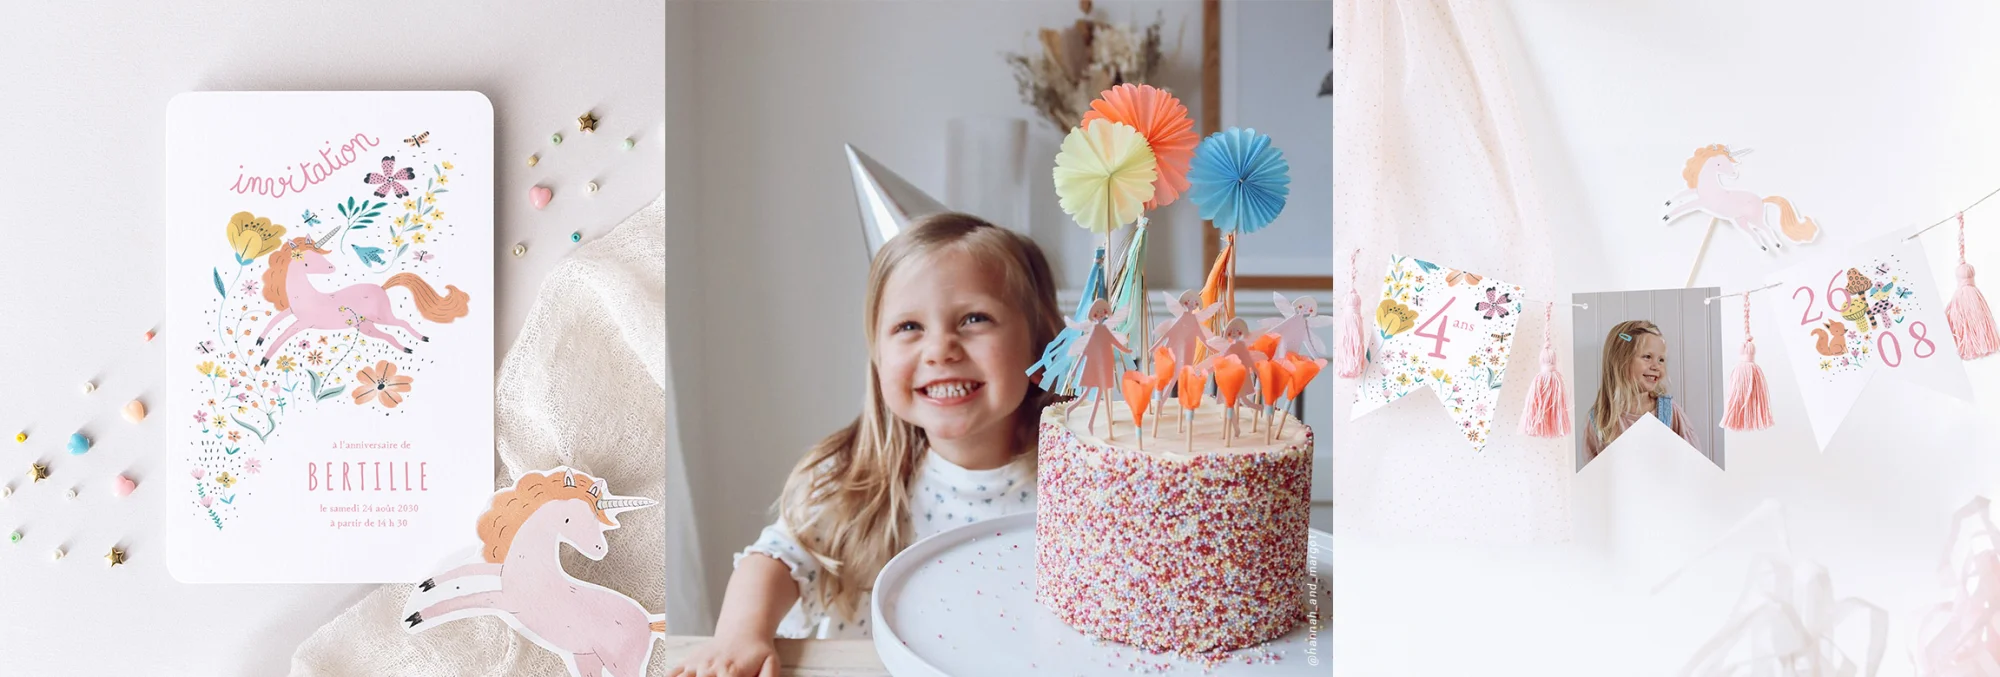 Invitation anniversaire Garçon 1 an avec gâteau